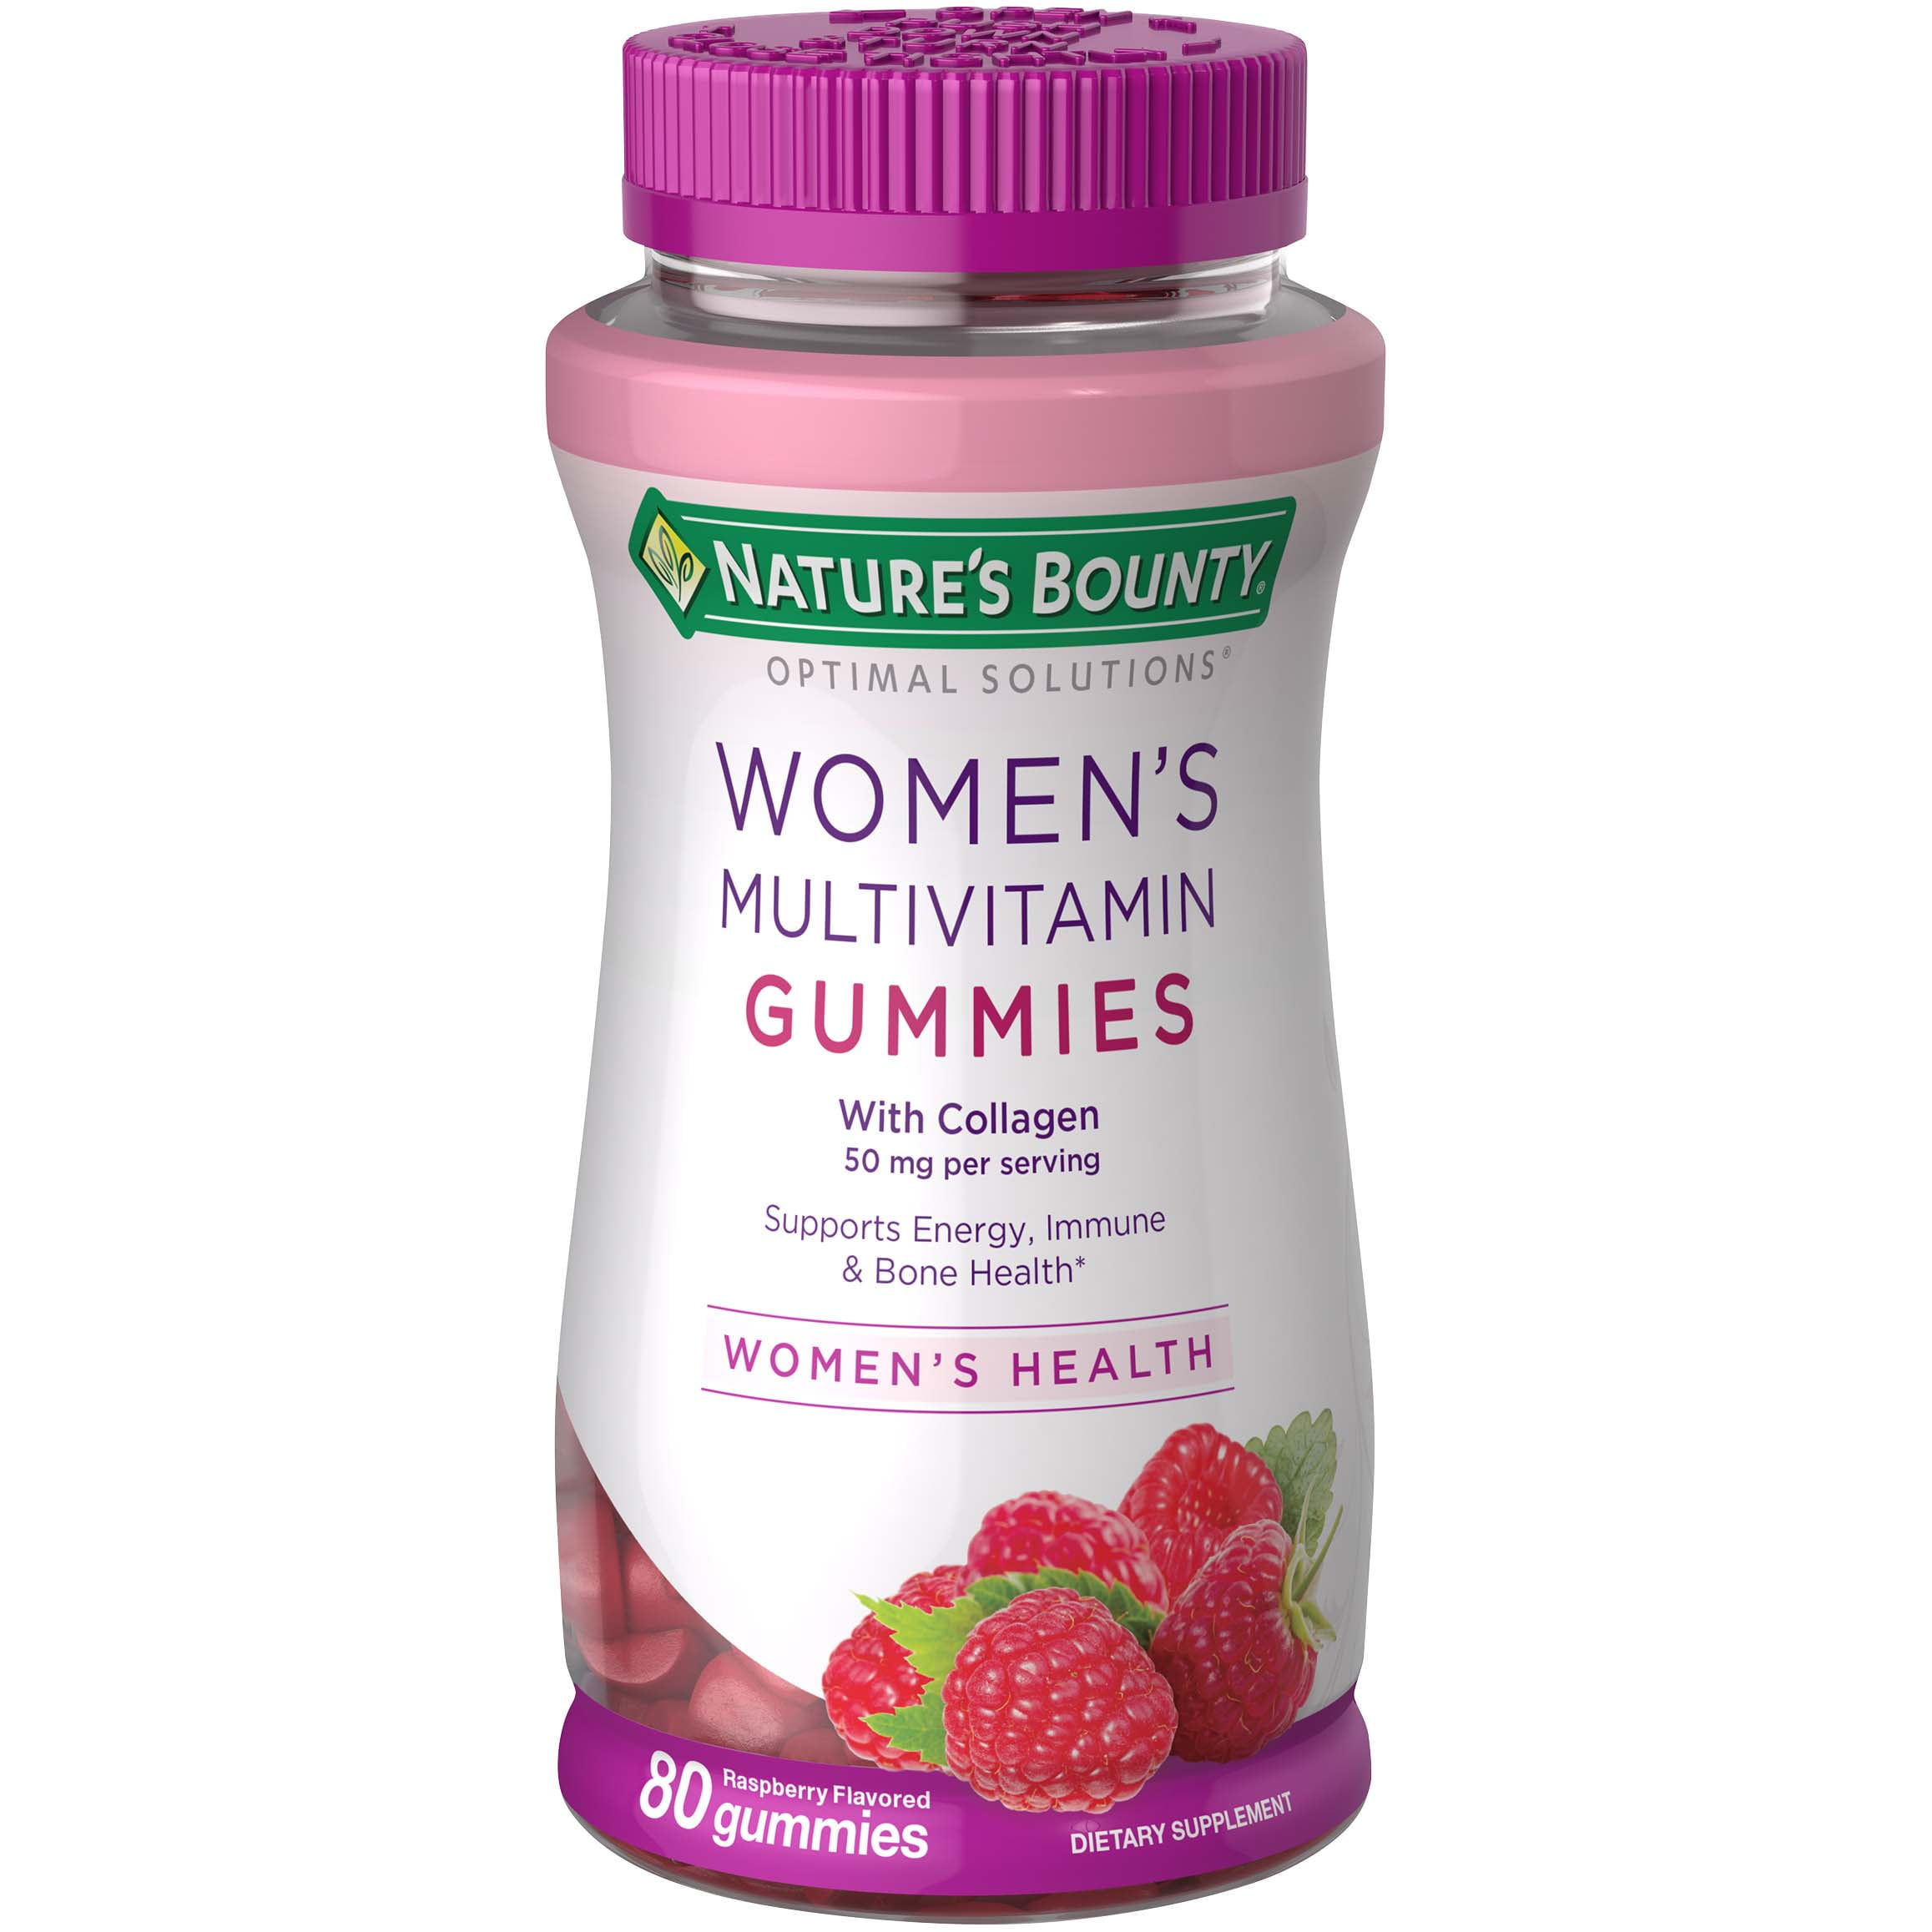 nature-s-bounty-optimal-solutions-women-s-multivitamin-gummy-vitamins